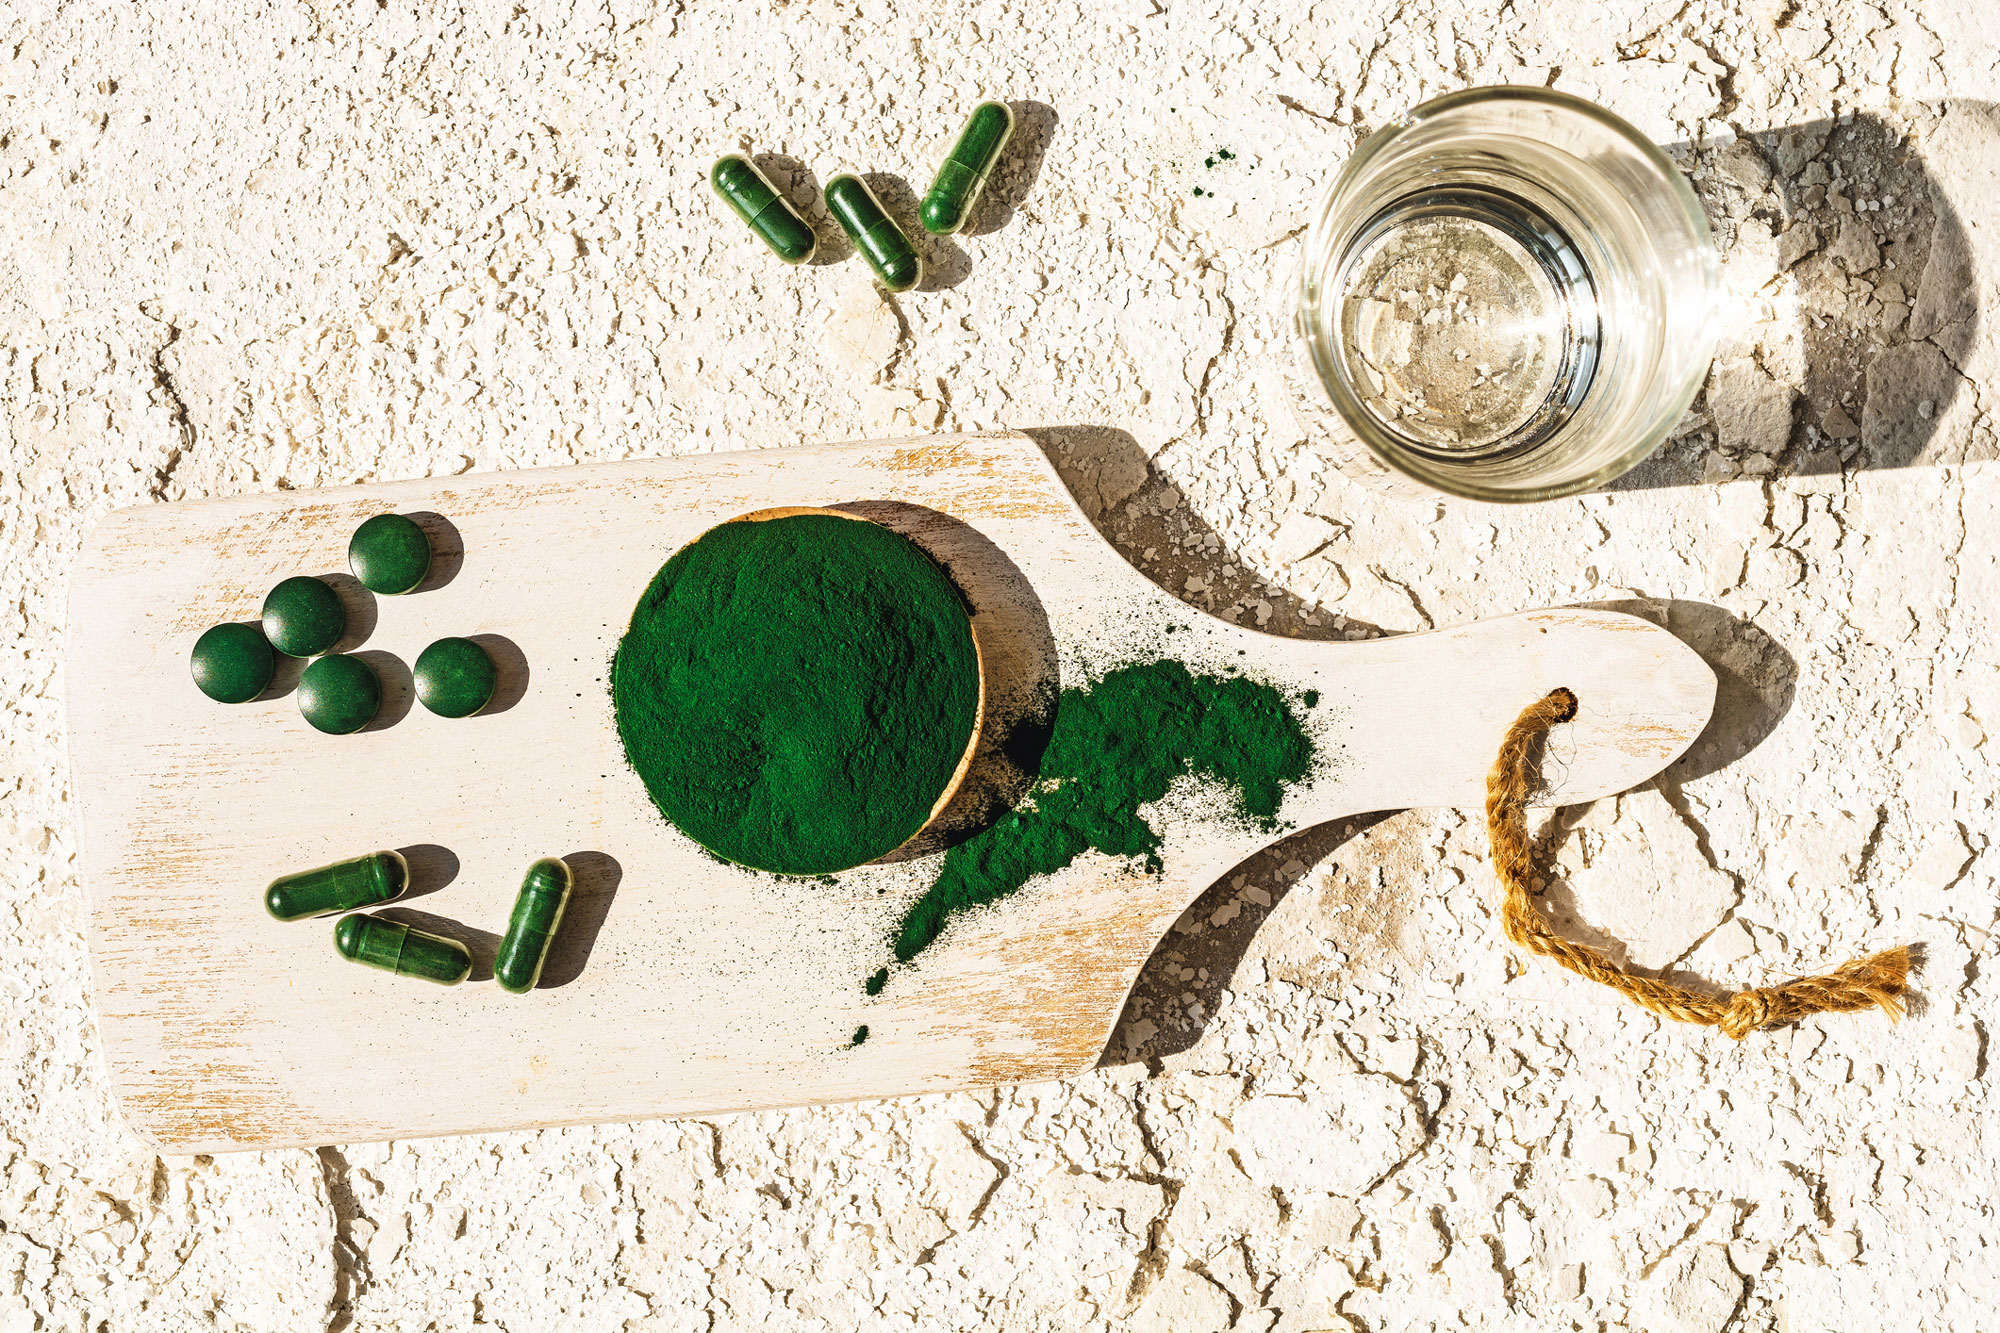 Green powder, pills and capsules